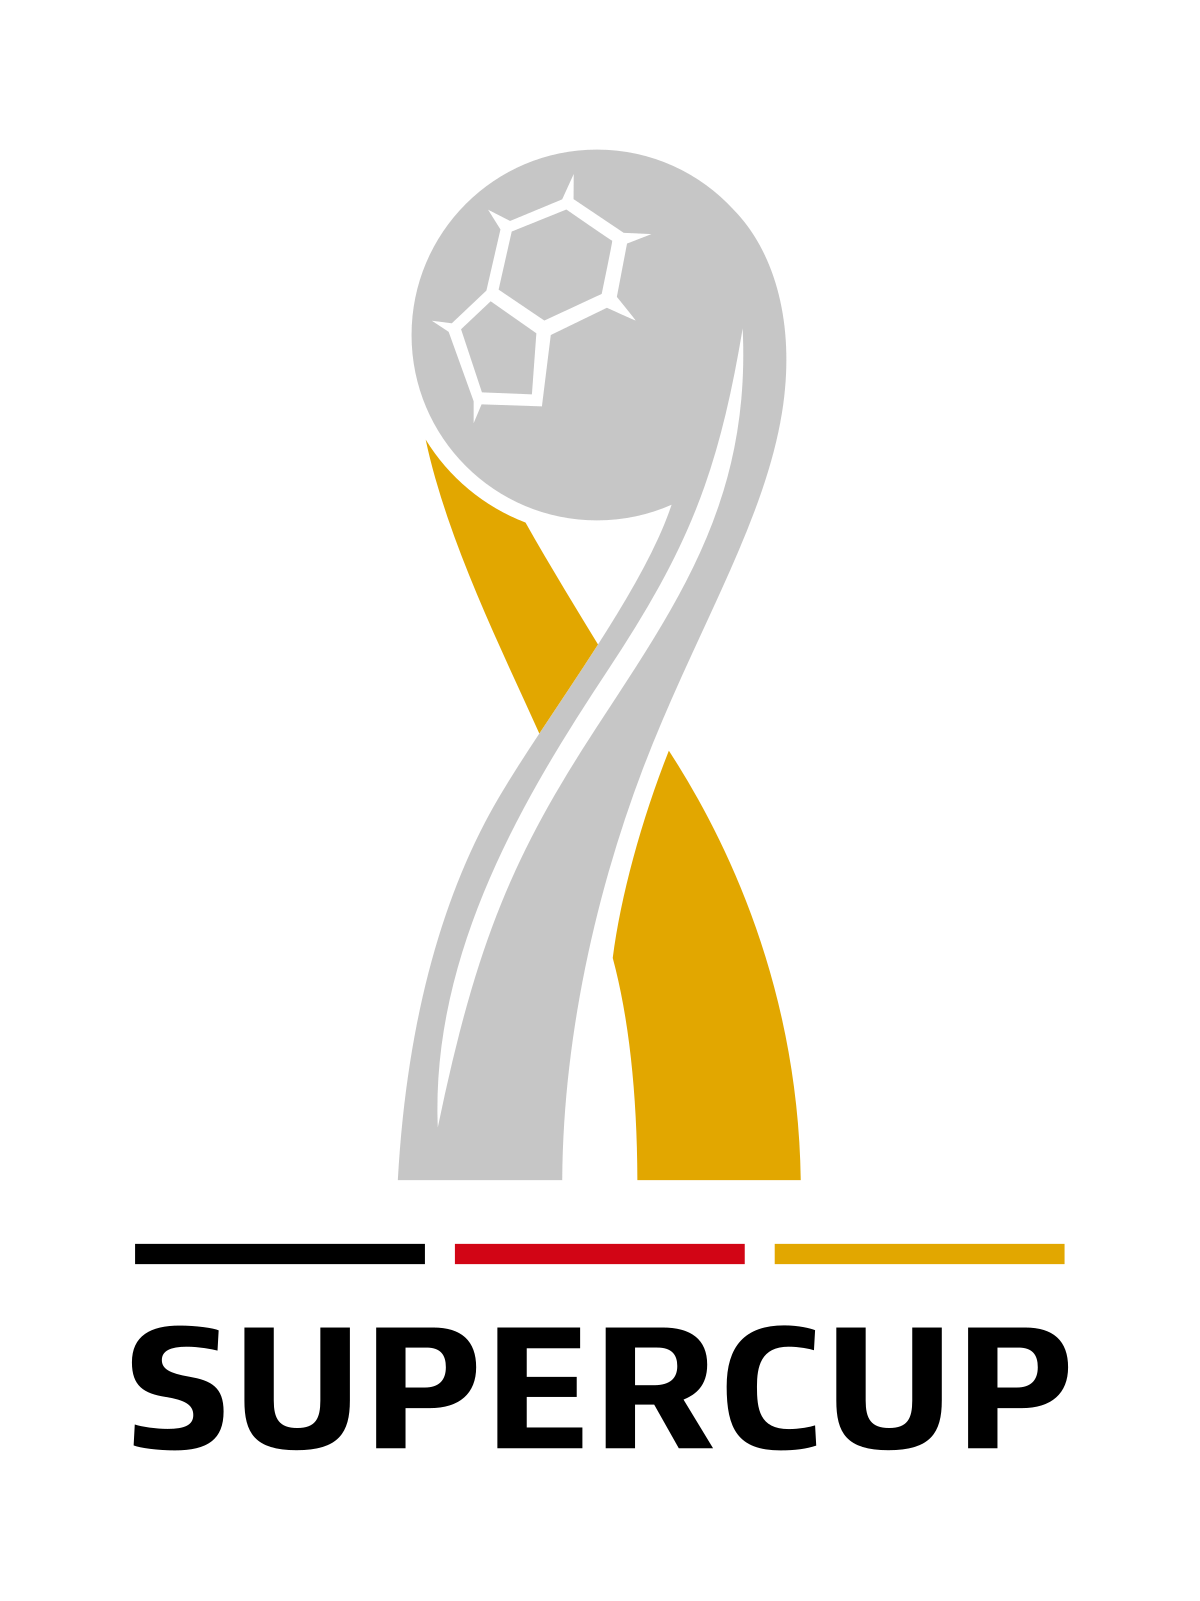 Dfl Supercup Wikipedia